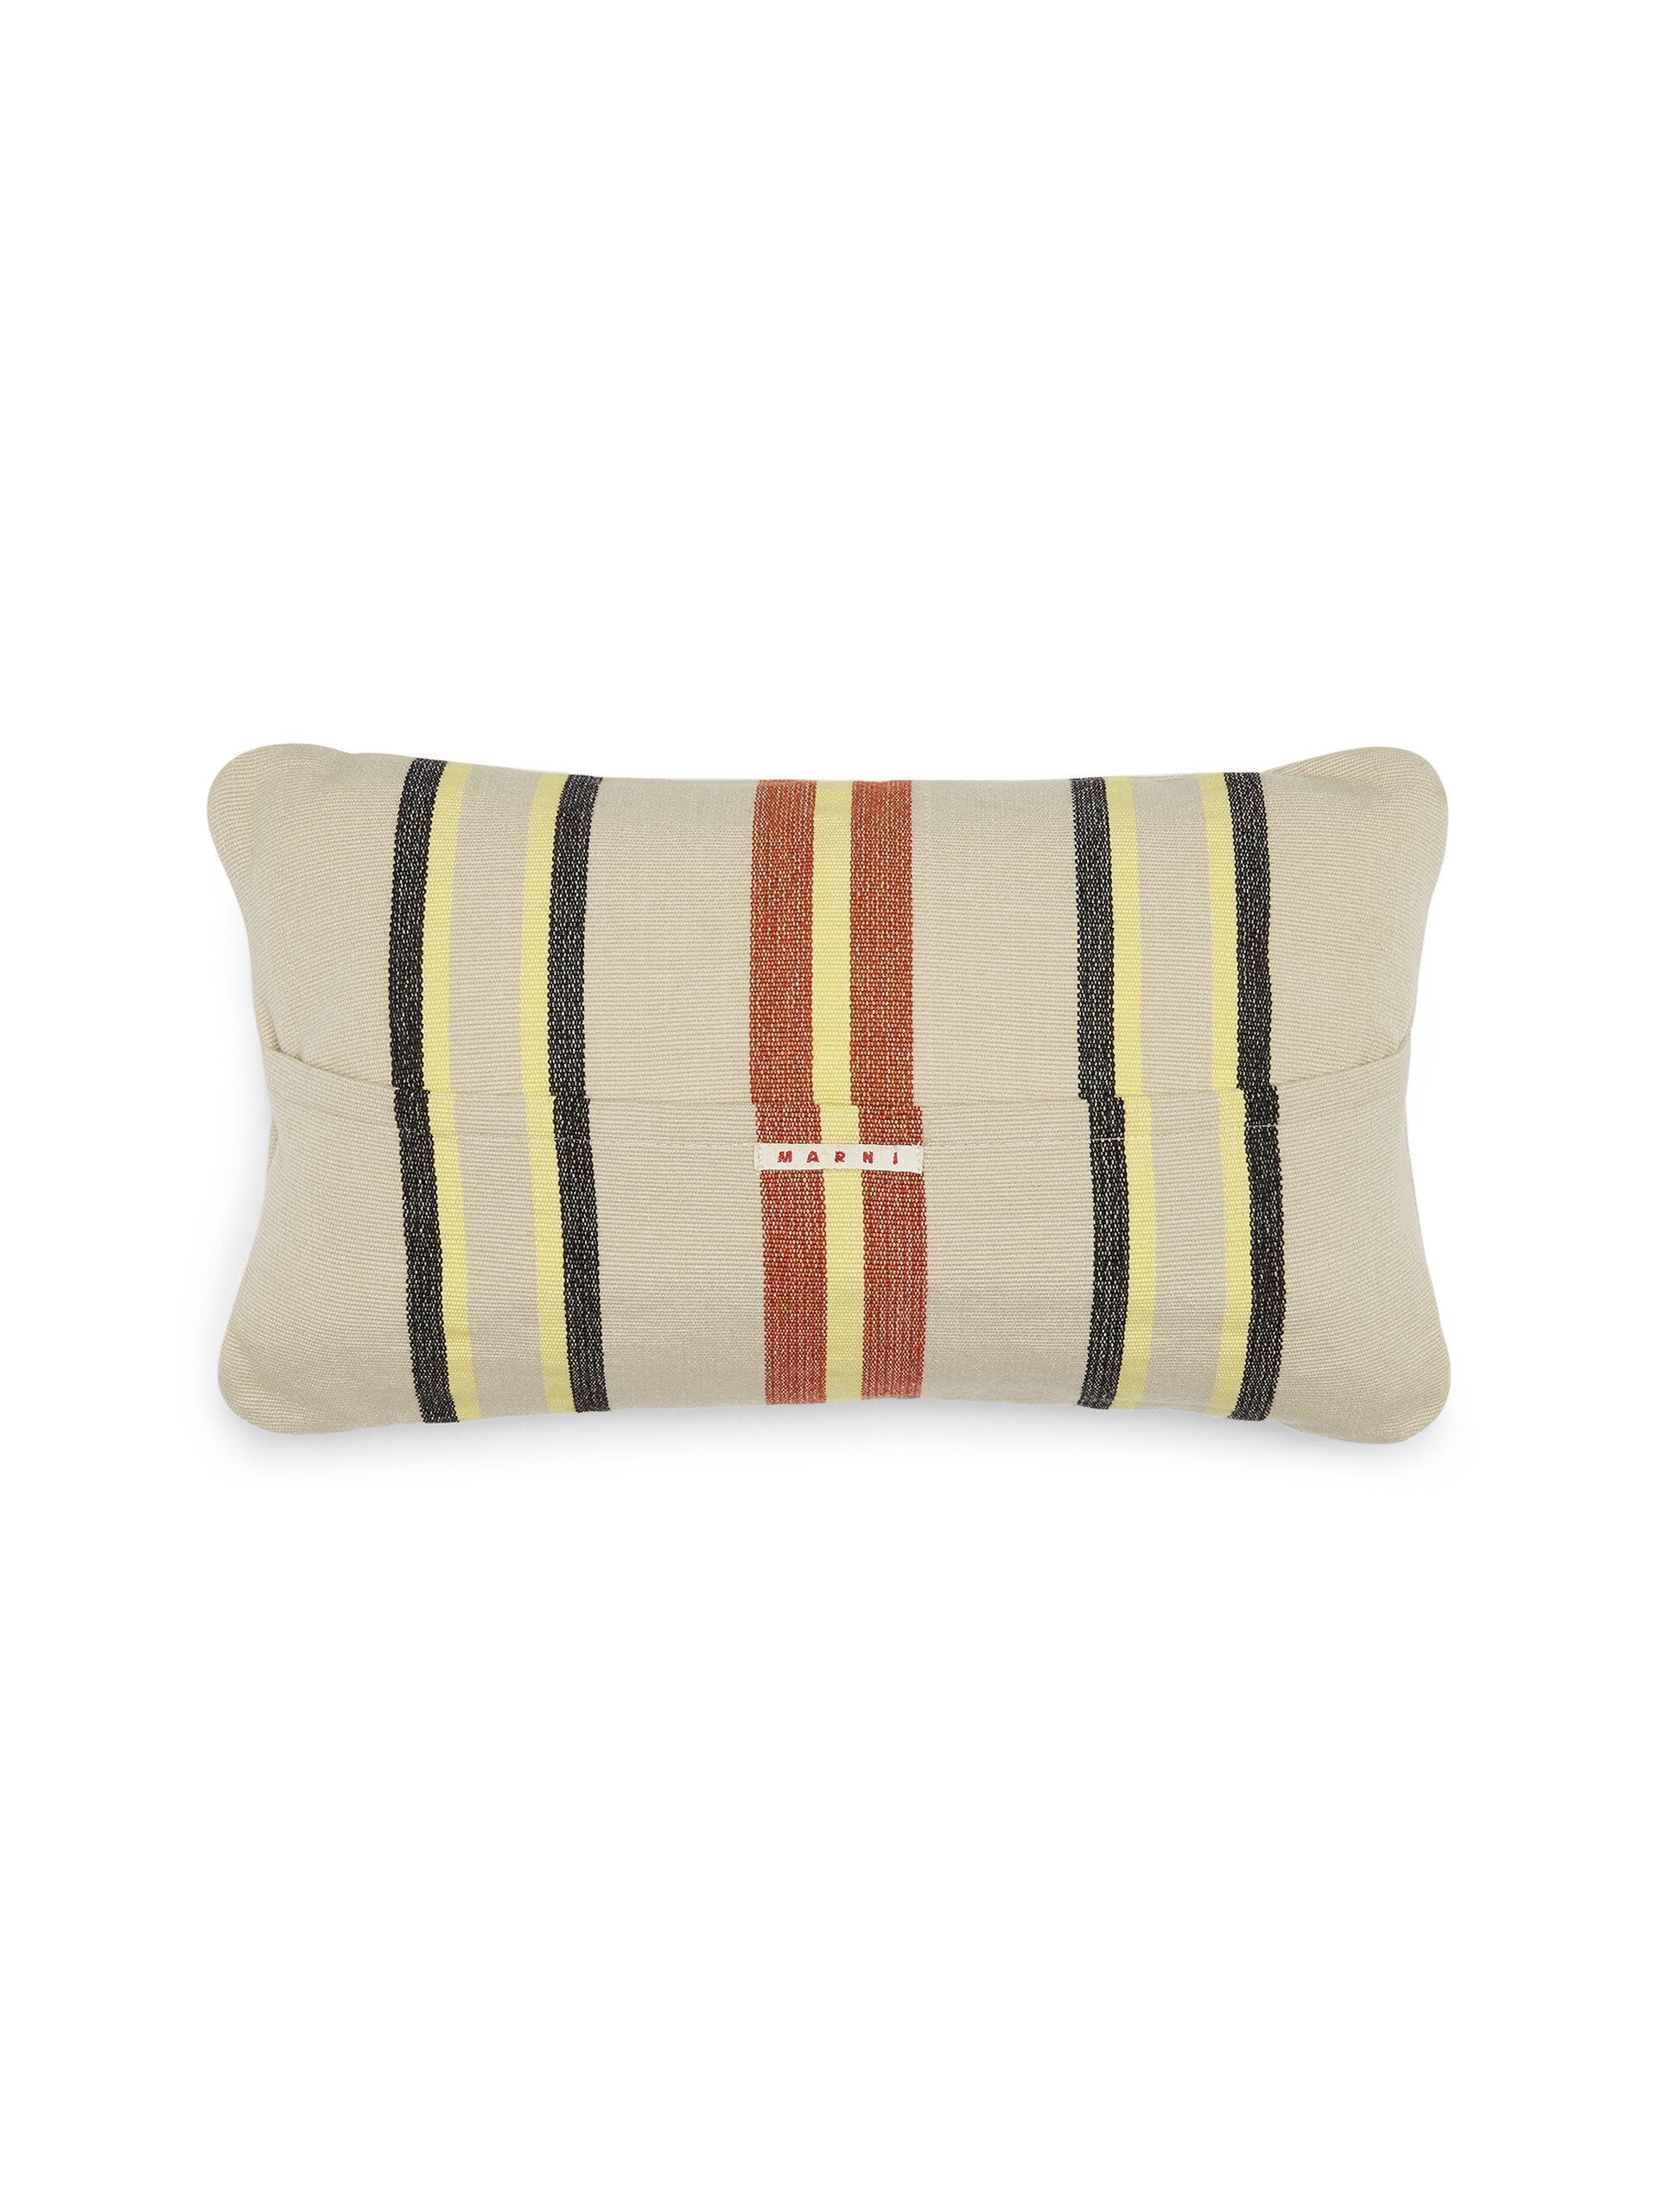 MARNI MARKET cushion in multicolor beige fabric - Furniture - Image 2